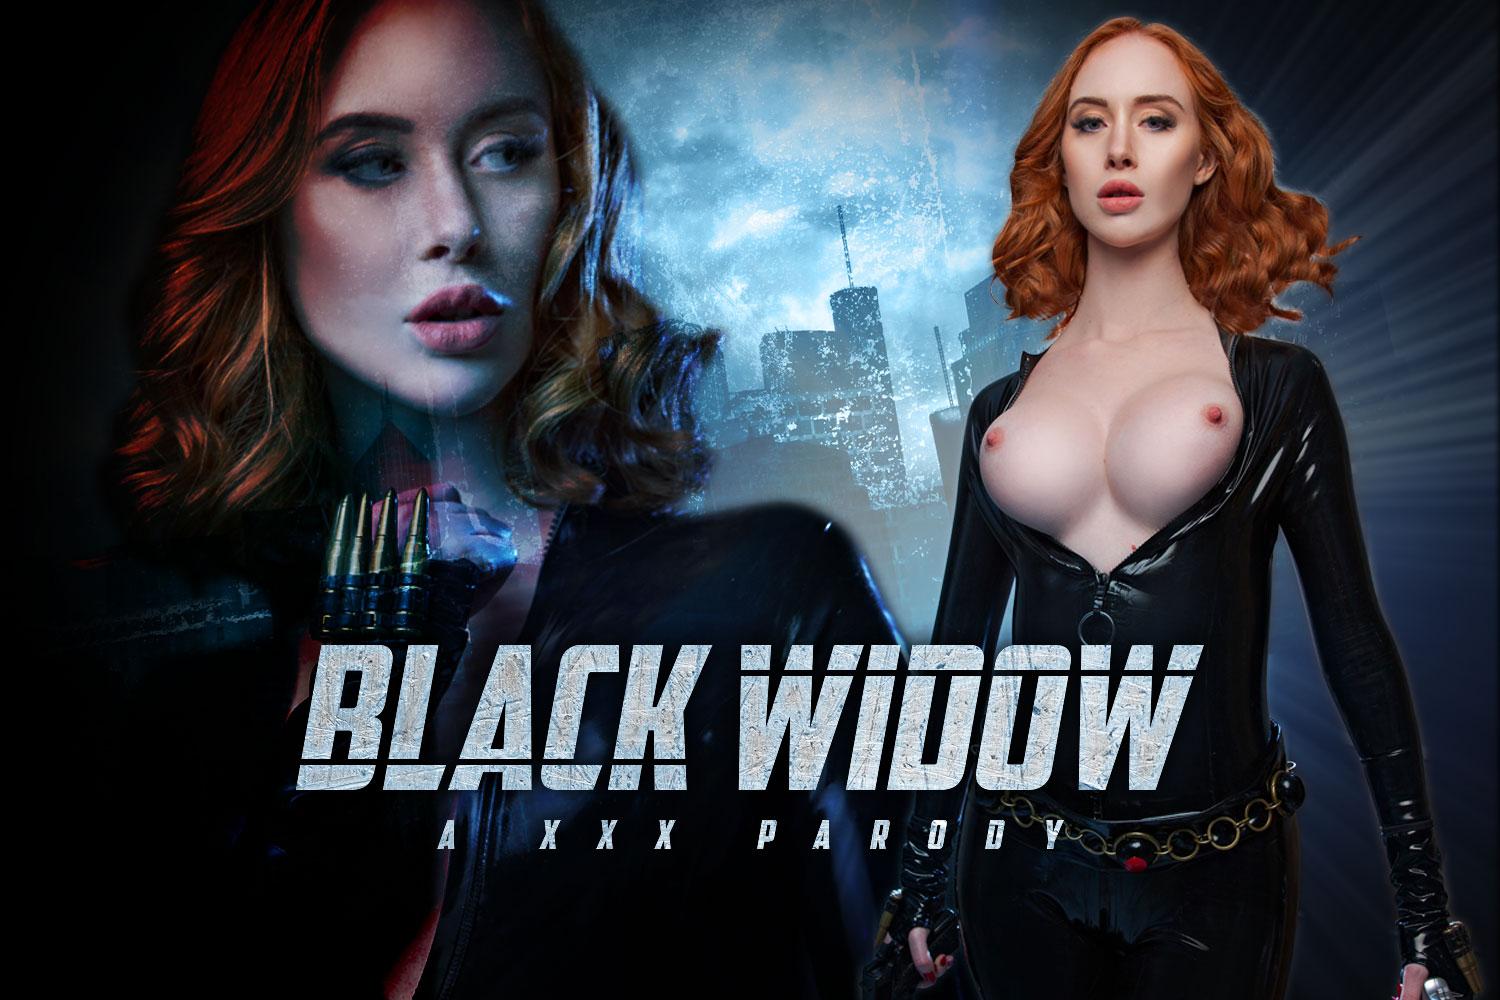 dale graham recommends Black Widow Porn Parody